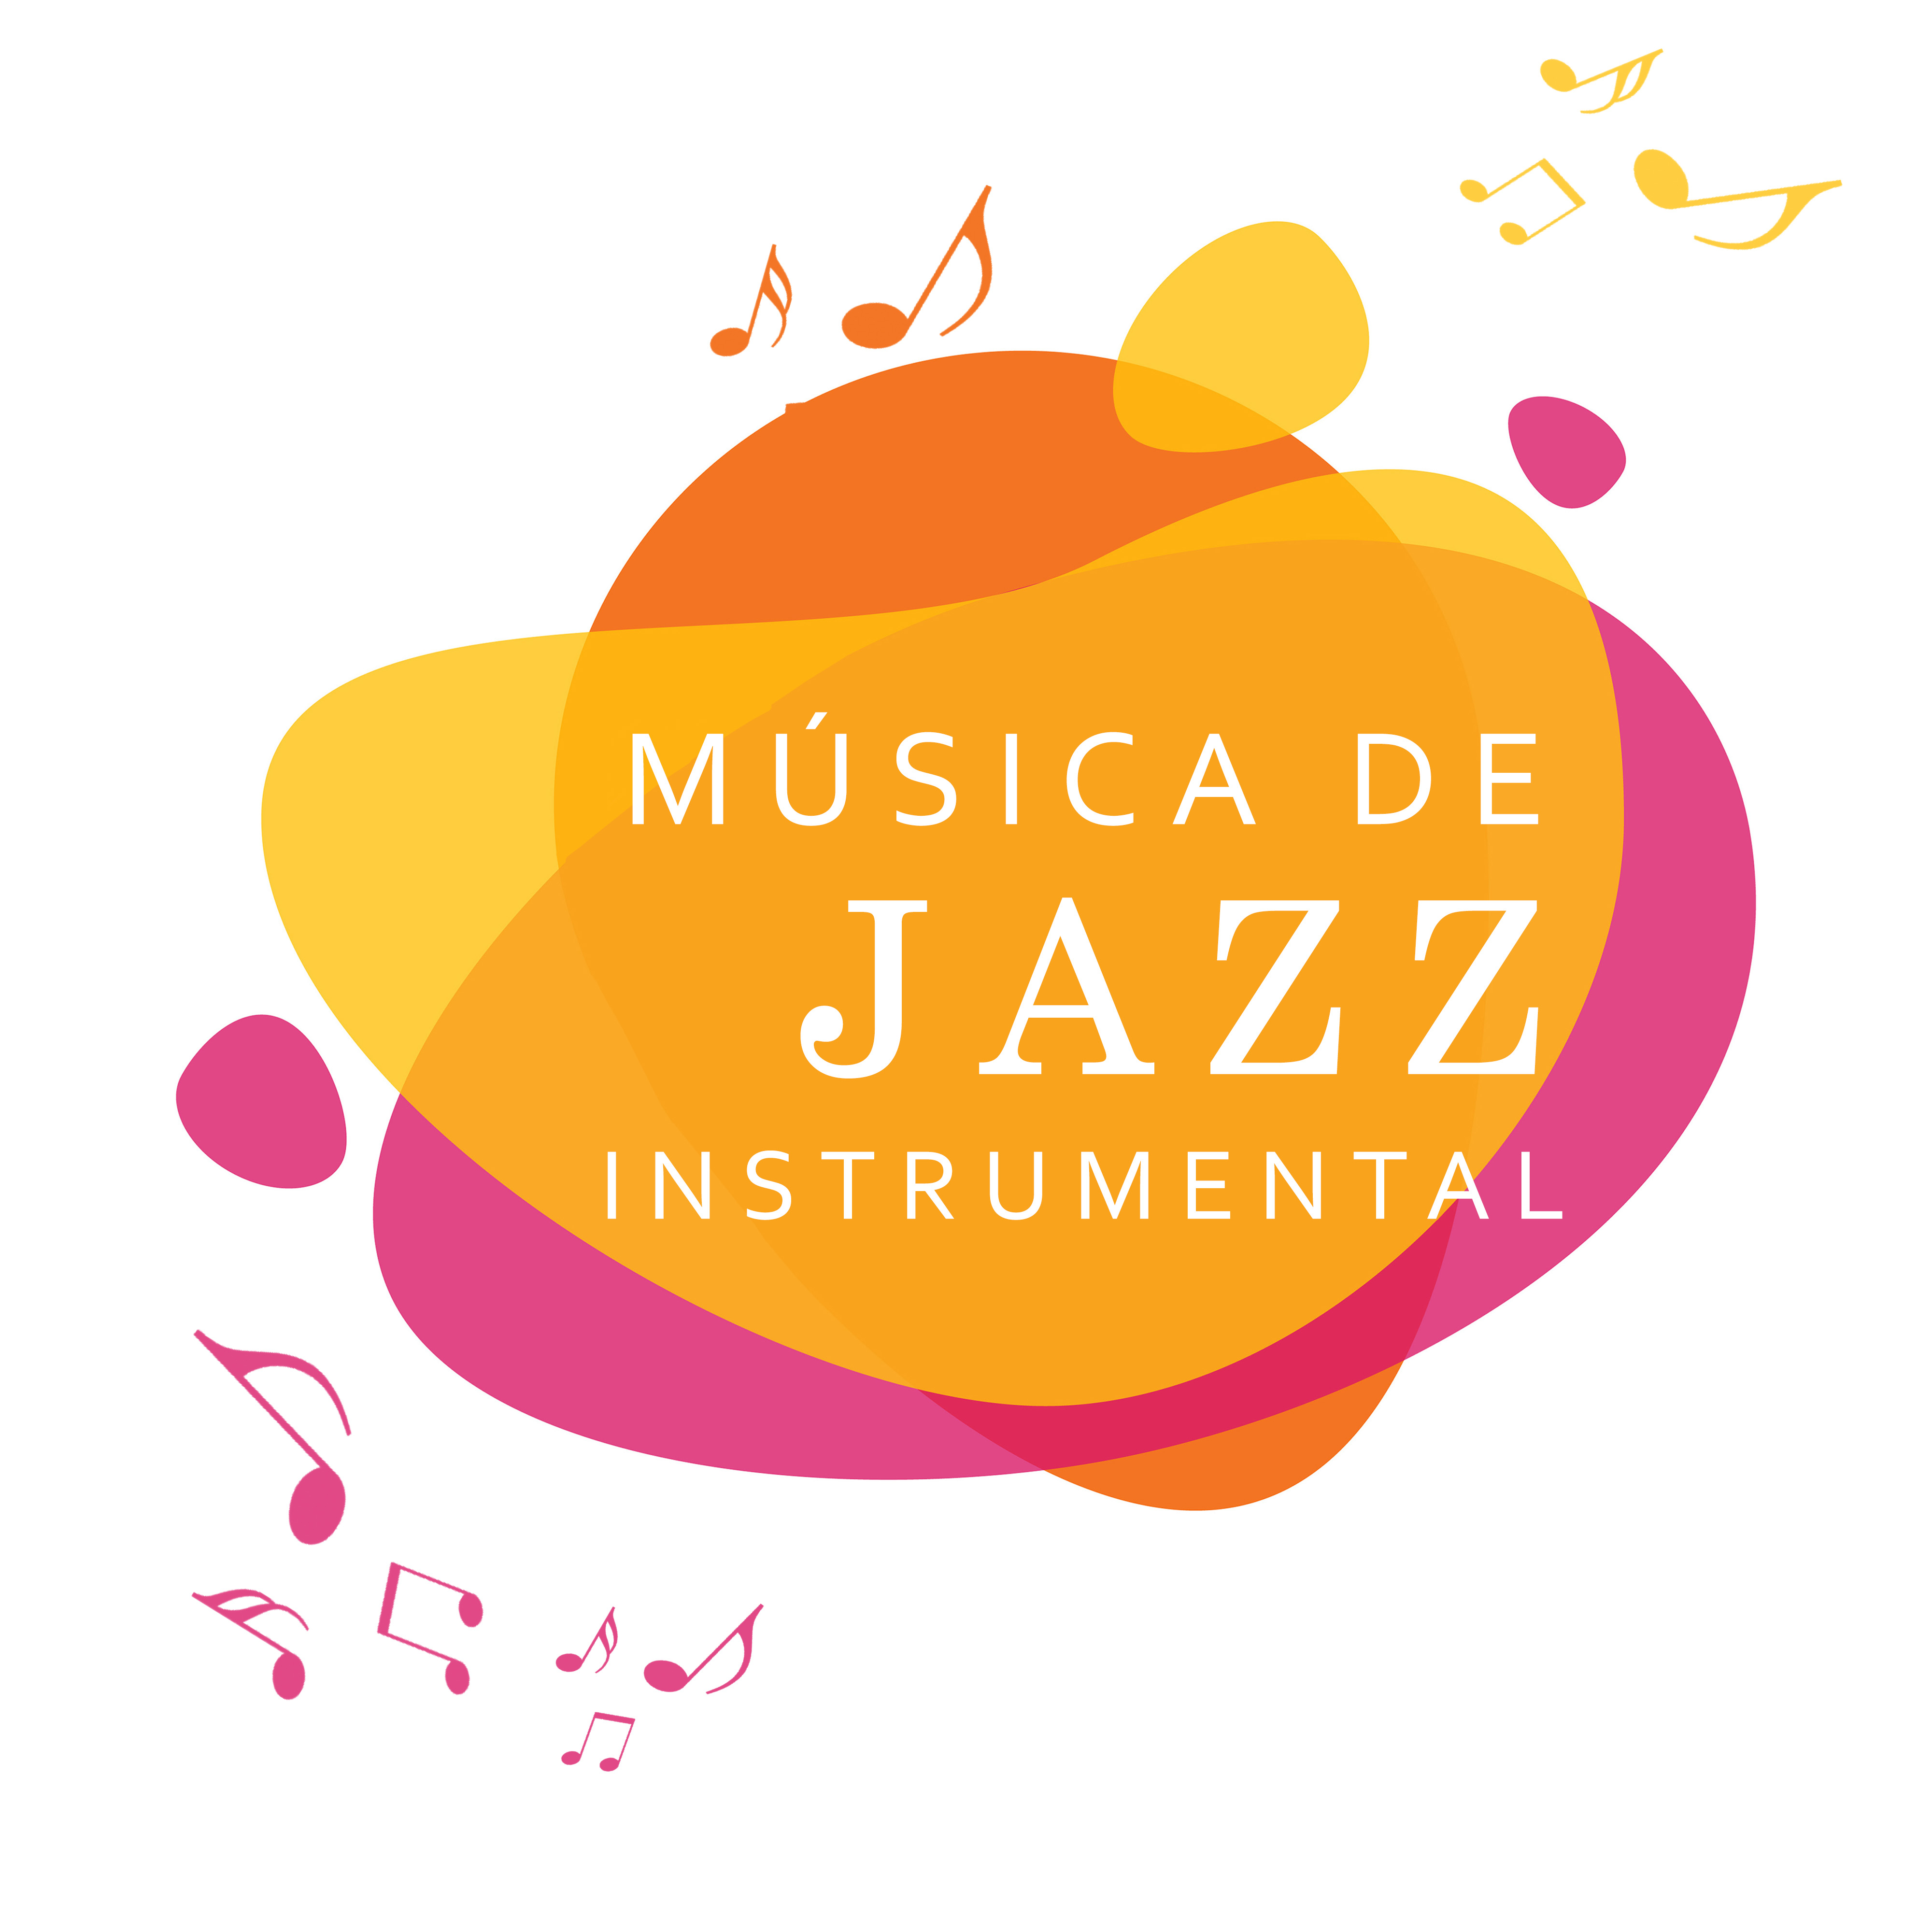 Mu sica de Jazz Instrumental